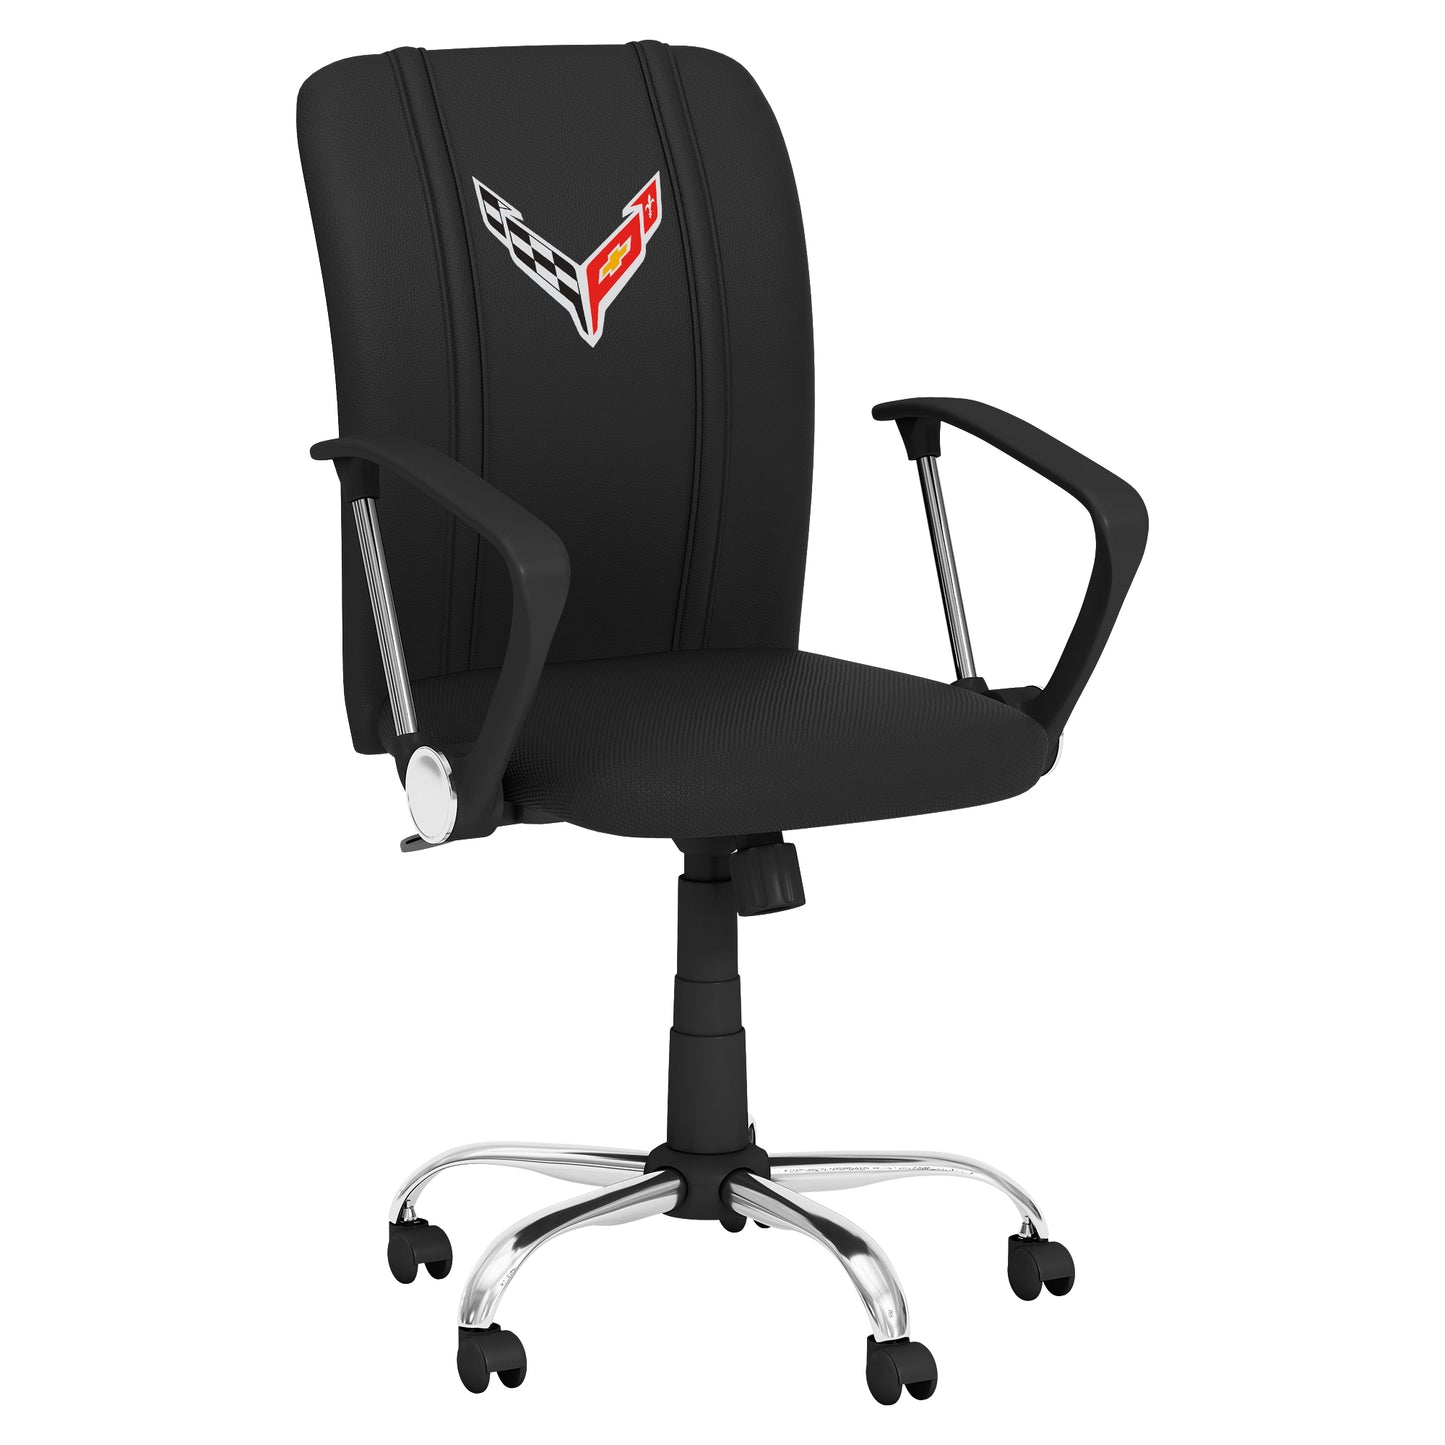 Curve Task Chair with Corvette Symbol Logo